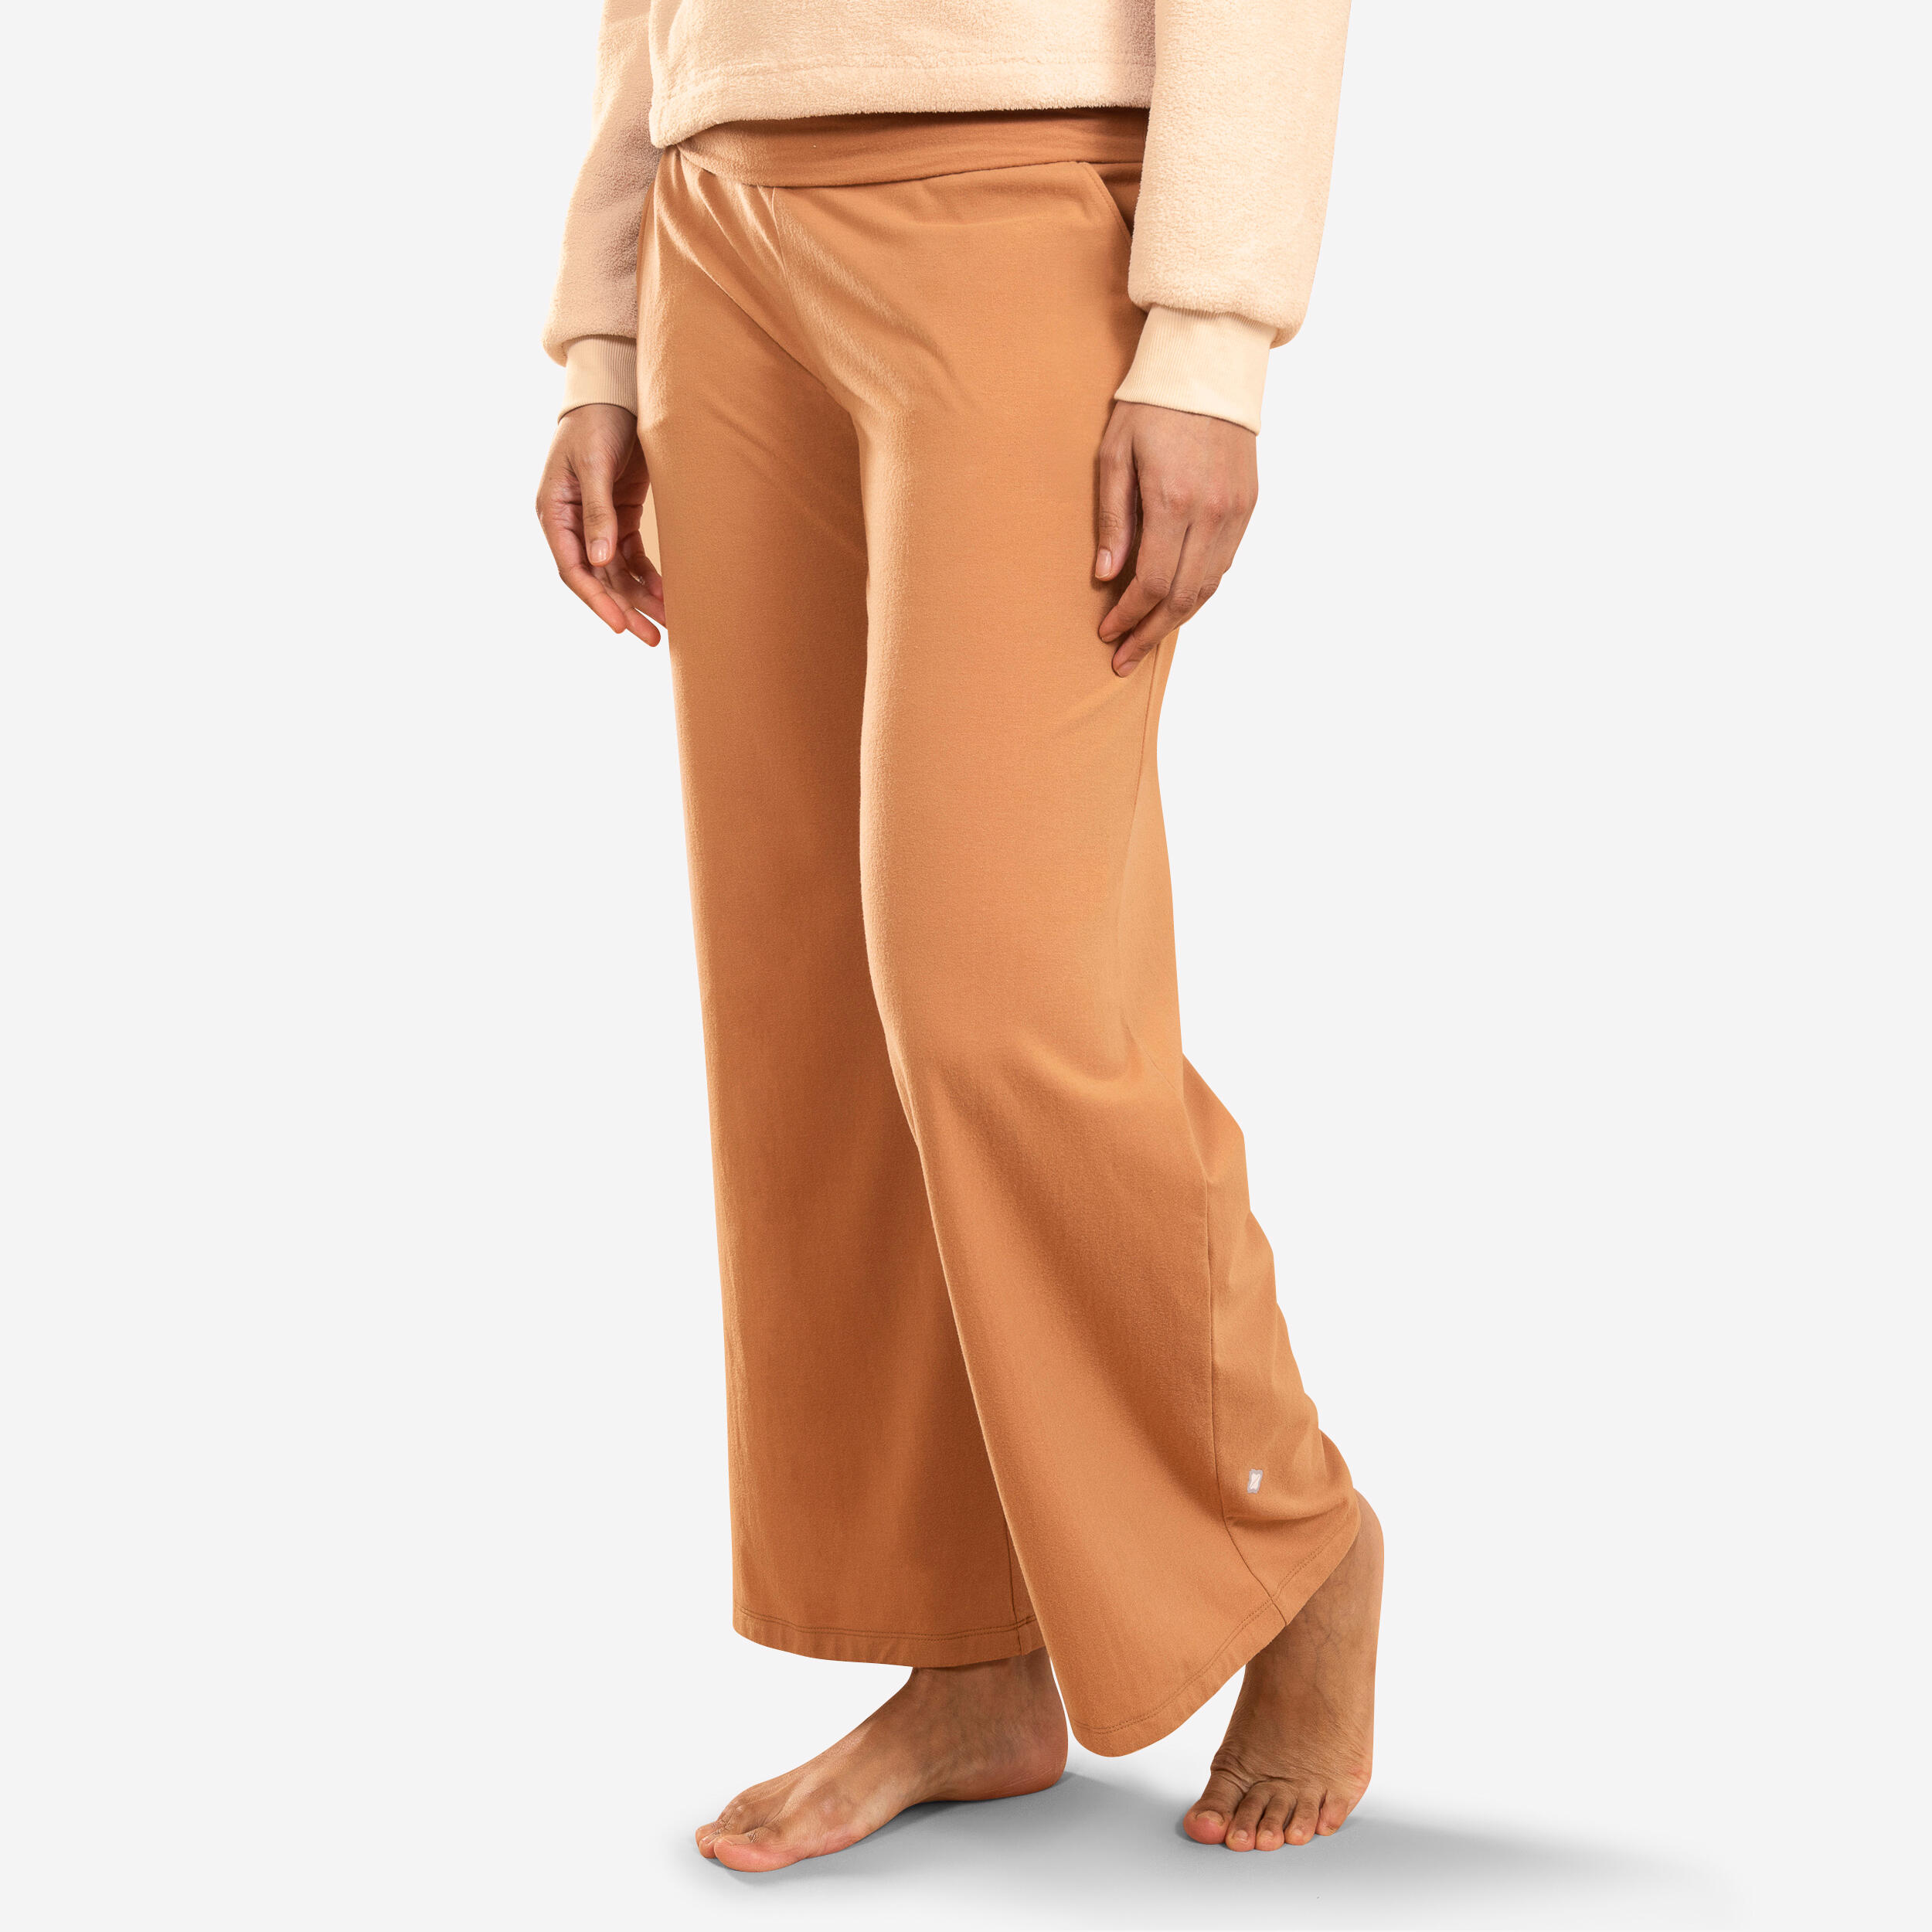 Pantalon de yoga femme - brun